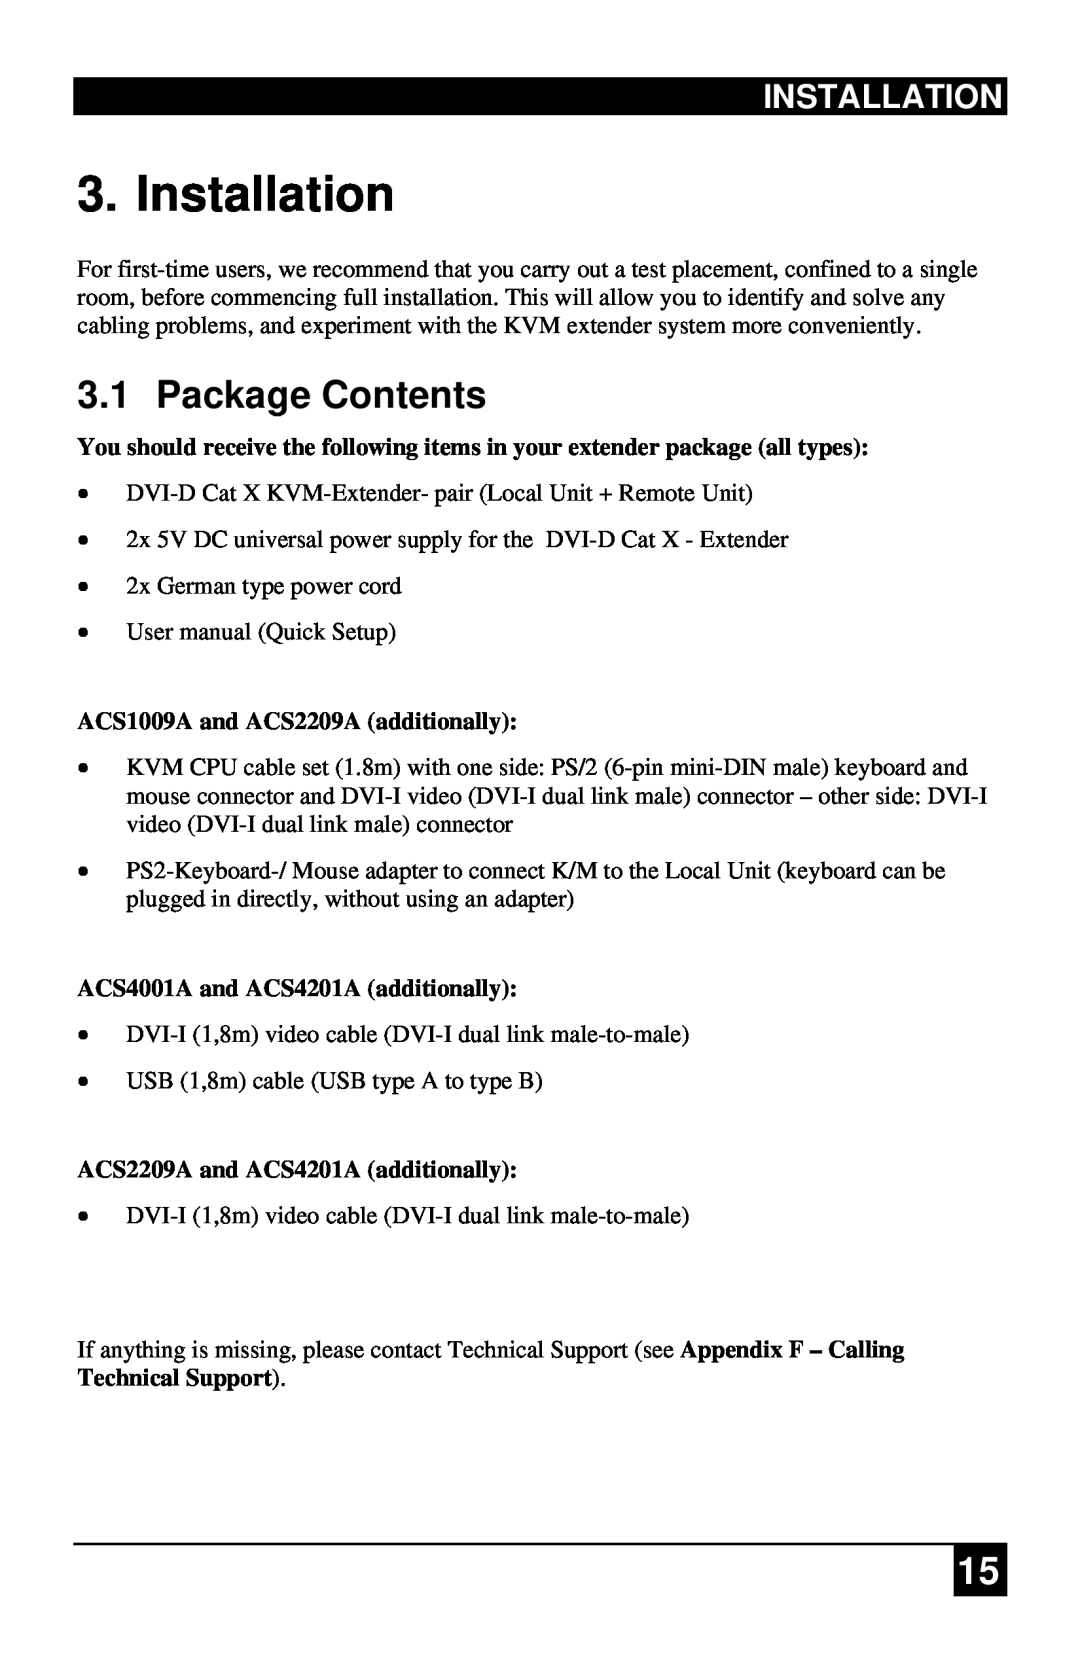 Black Box ACS4201A, ACS1009A manual Installation, Package Contents 